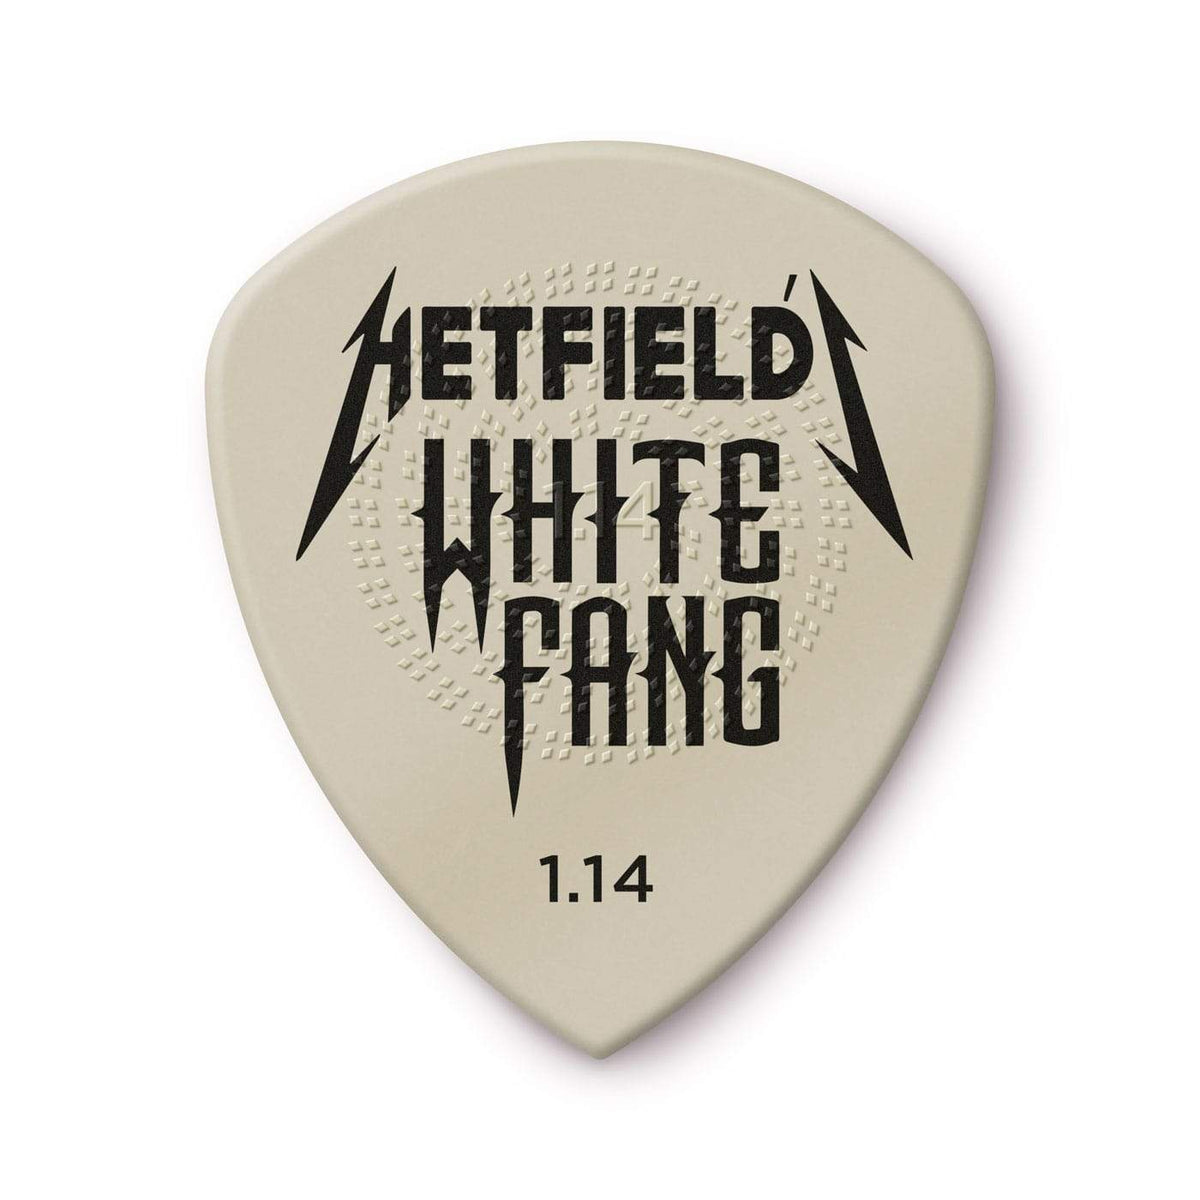 Dunlop Hetfield The White Fang 1.14mm Guitars on Main